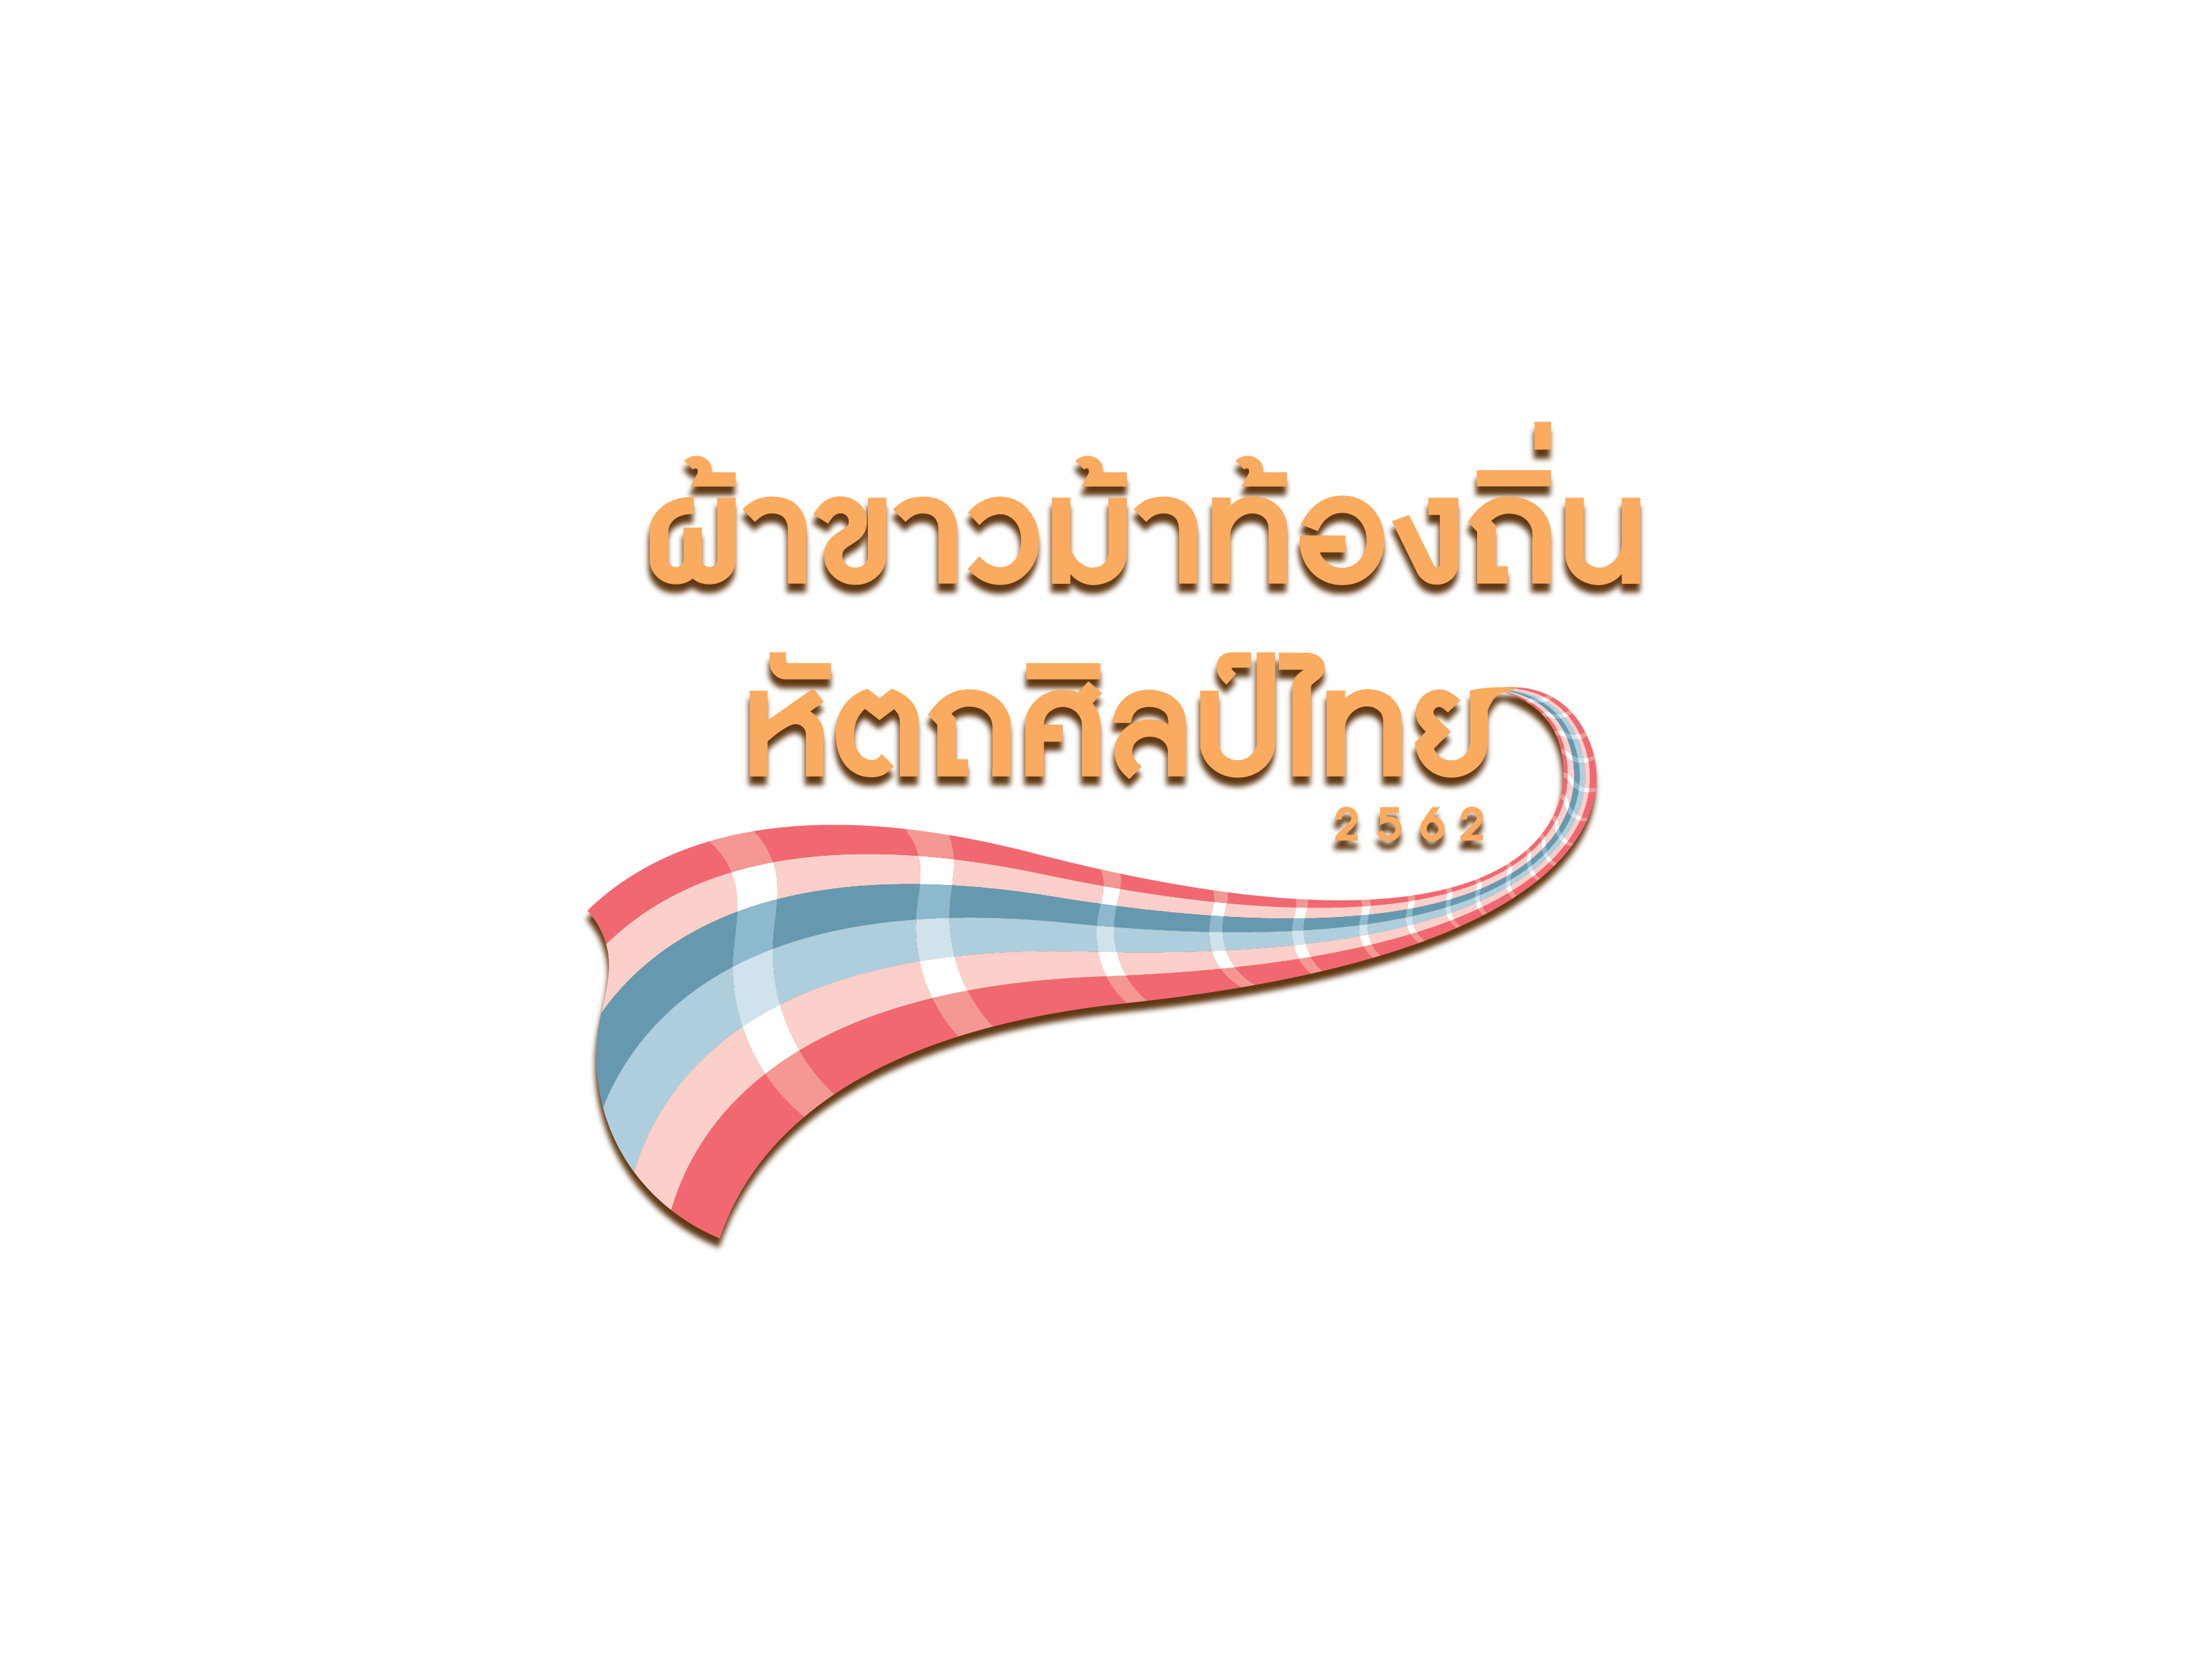 Local Pakaoma Project – a Thai Handicraft  2019